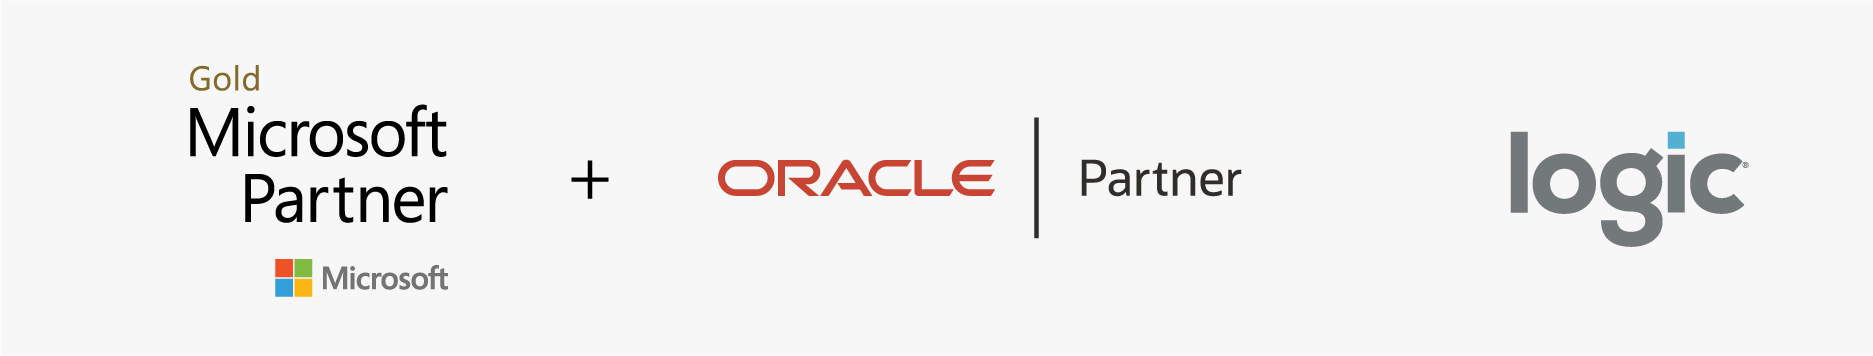 Microsoft Gold - Oracle Partner - Logic